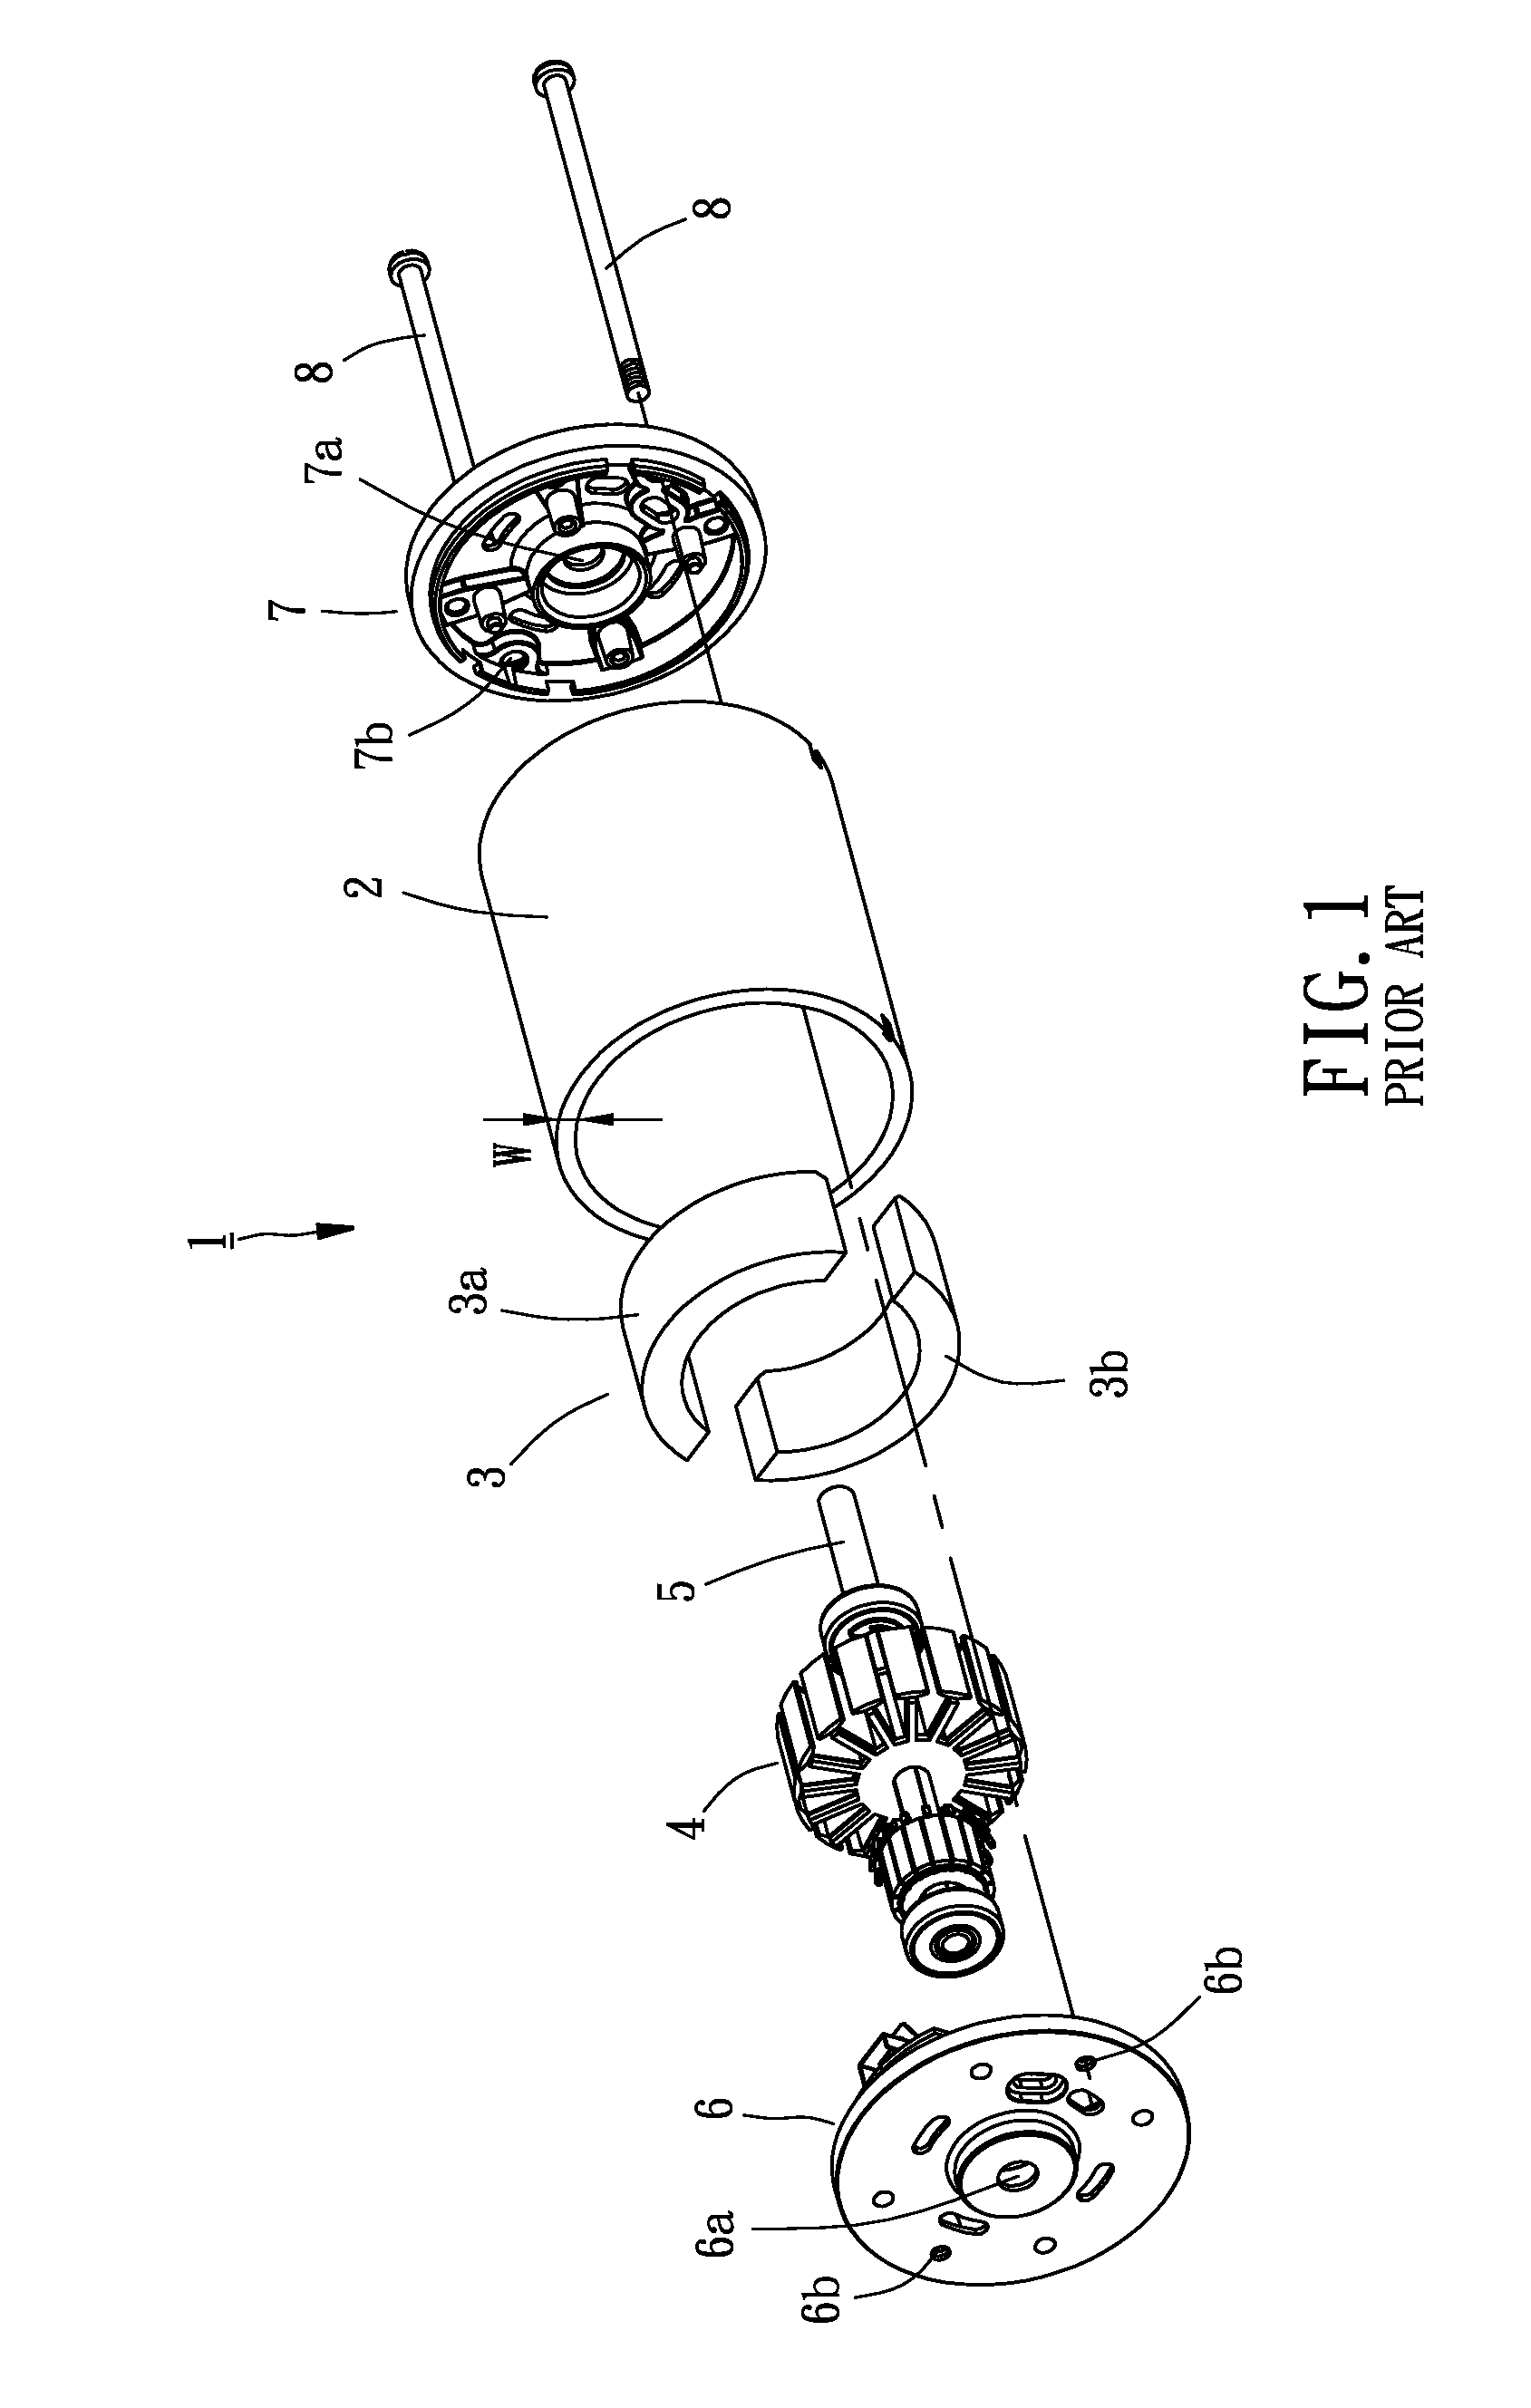 Permanent-magent motor